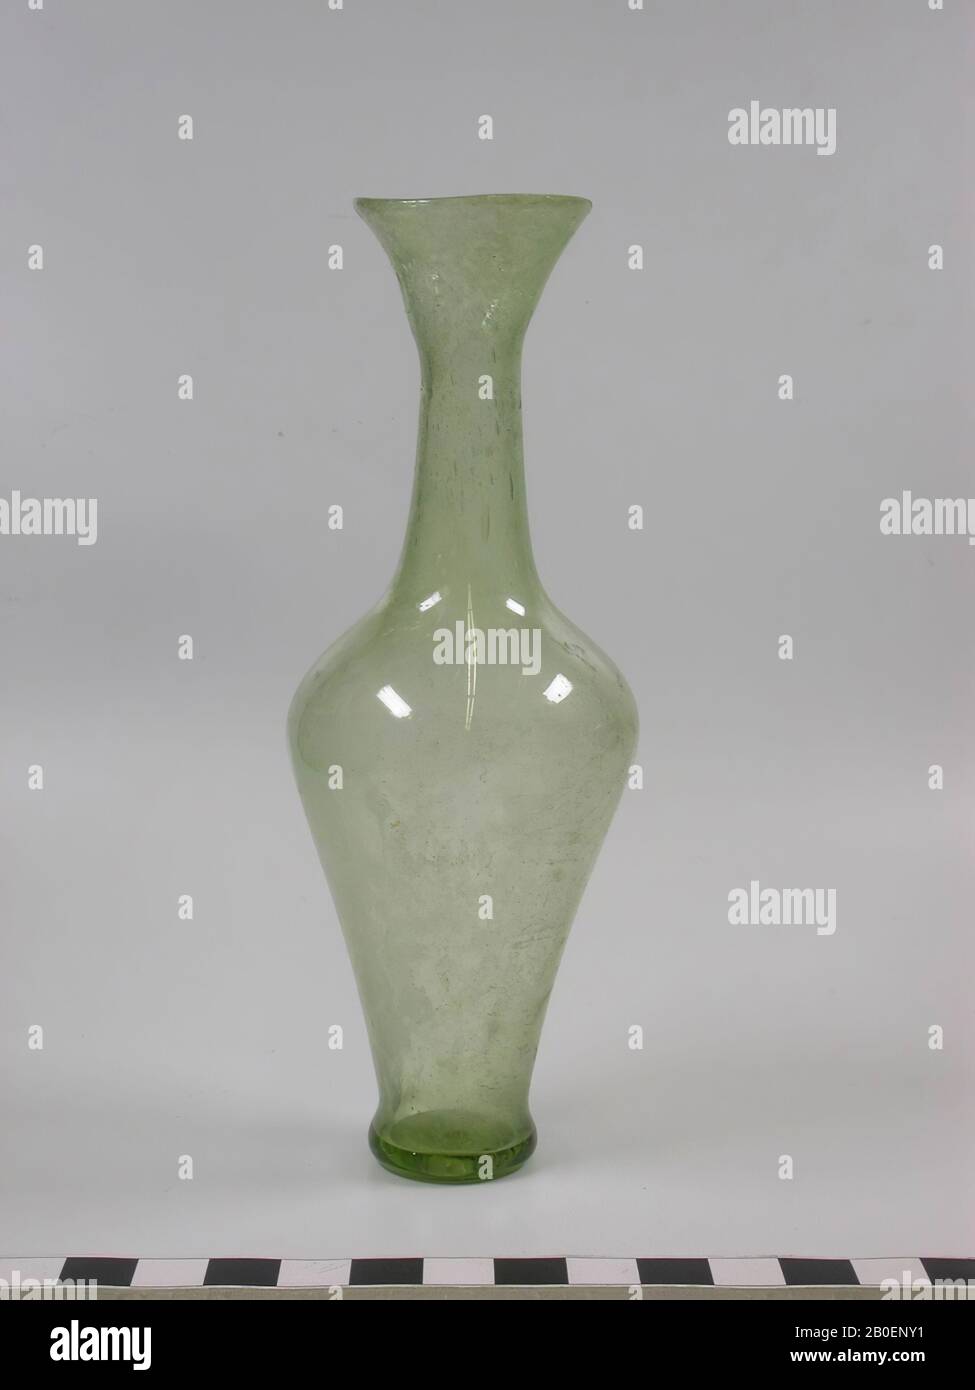 Classical antiquity, vase, glass, 16 cm, Location, Greece Stock Photo